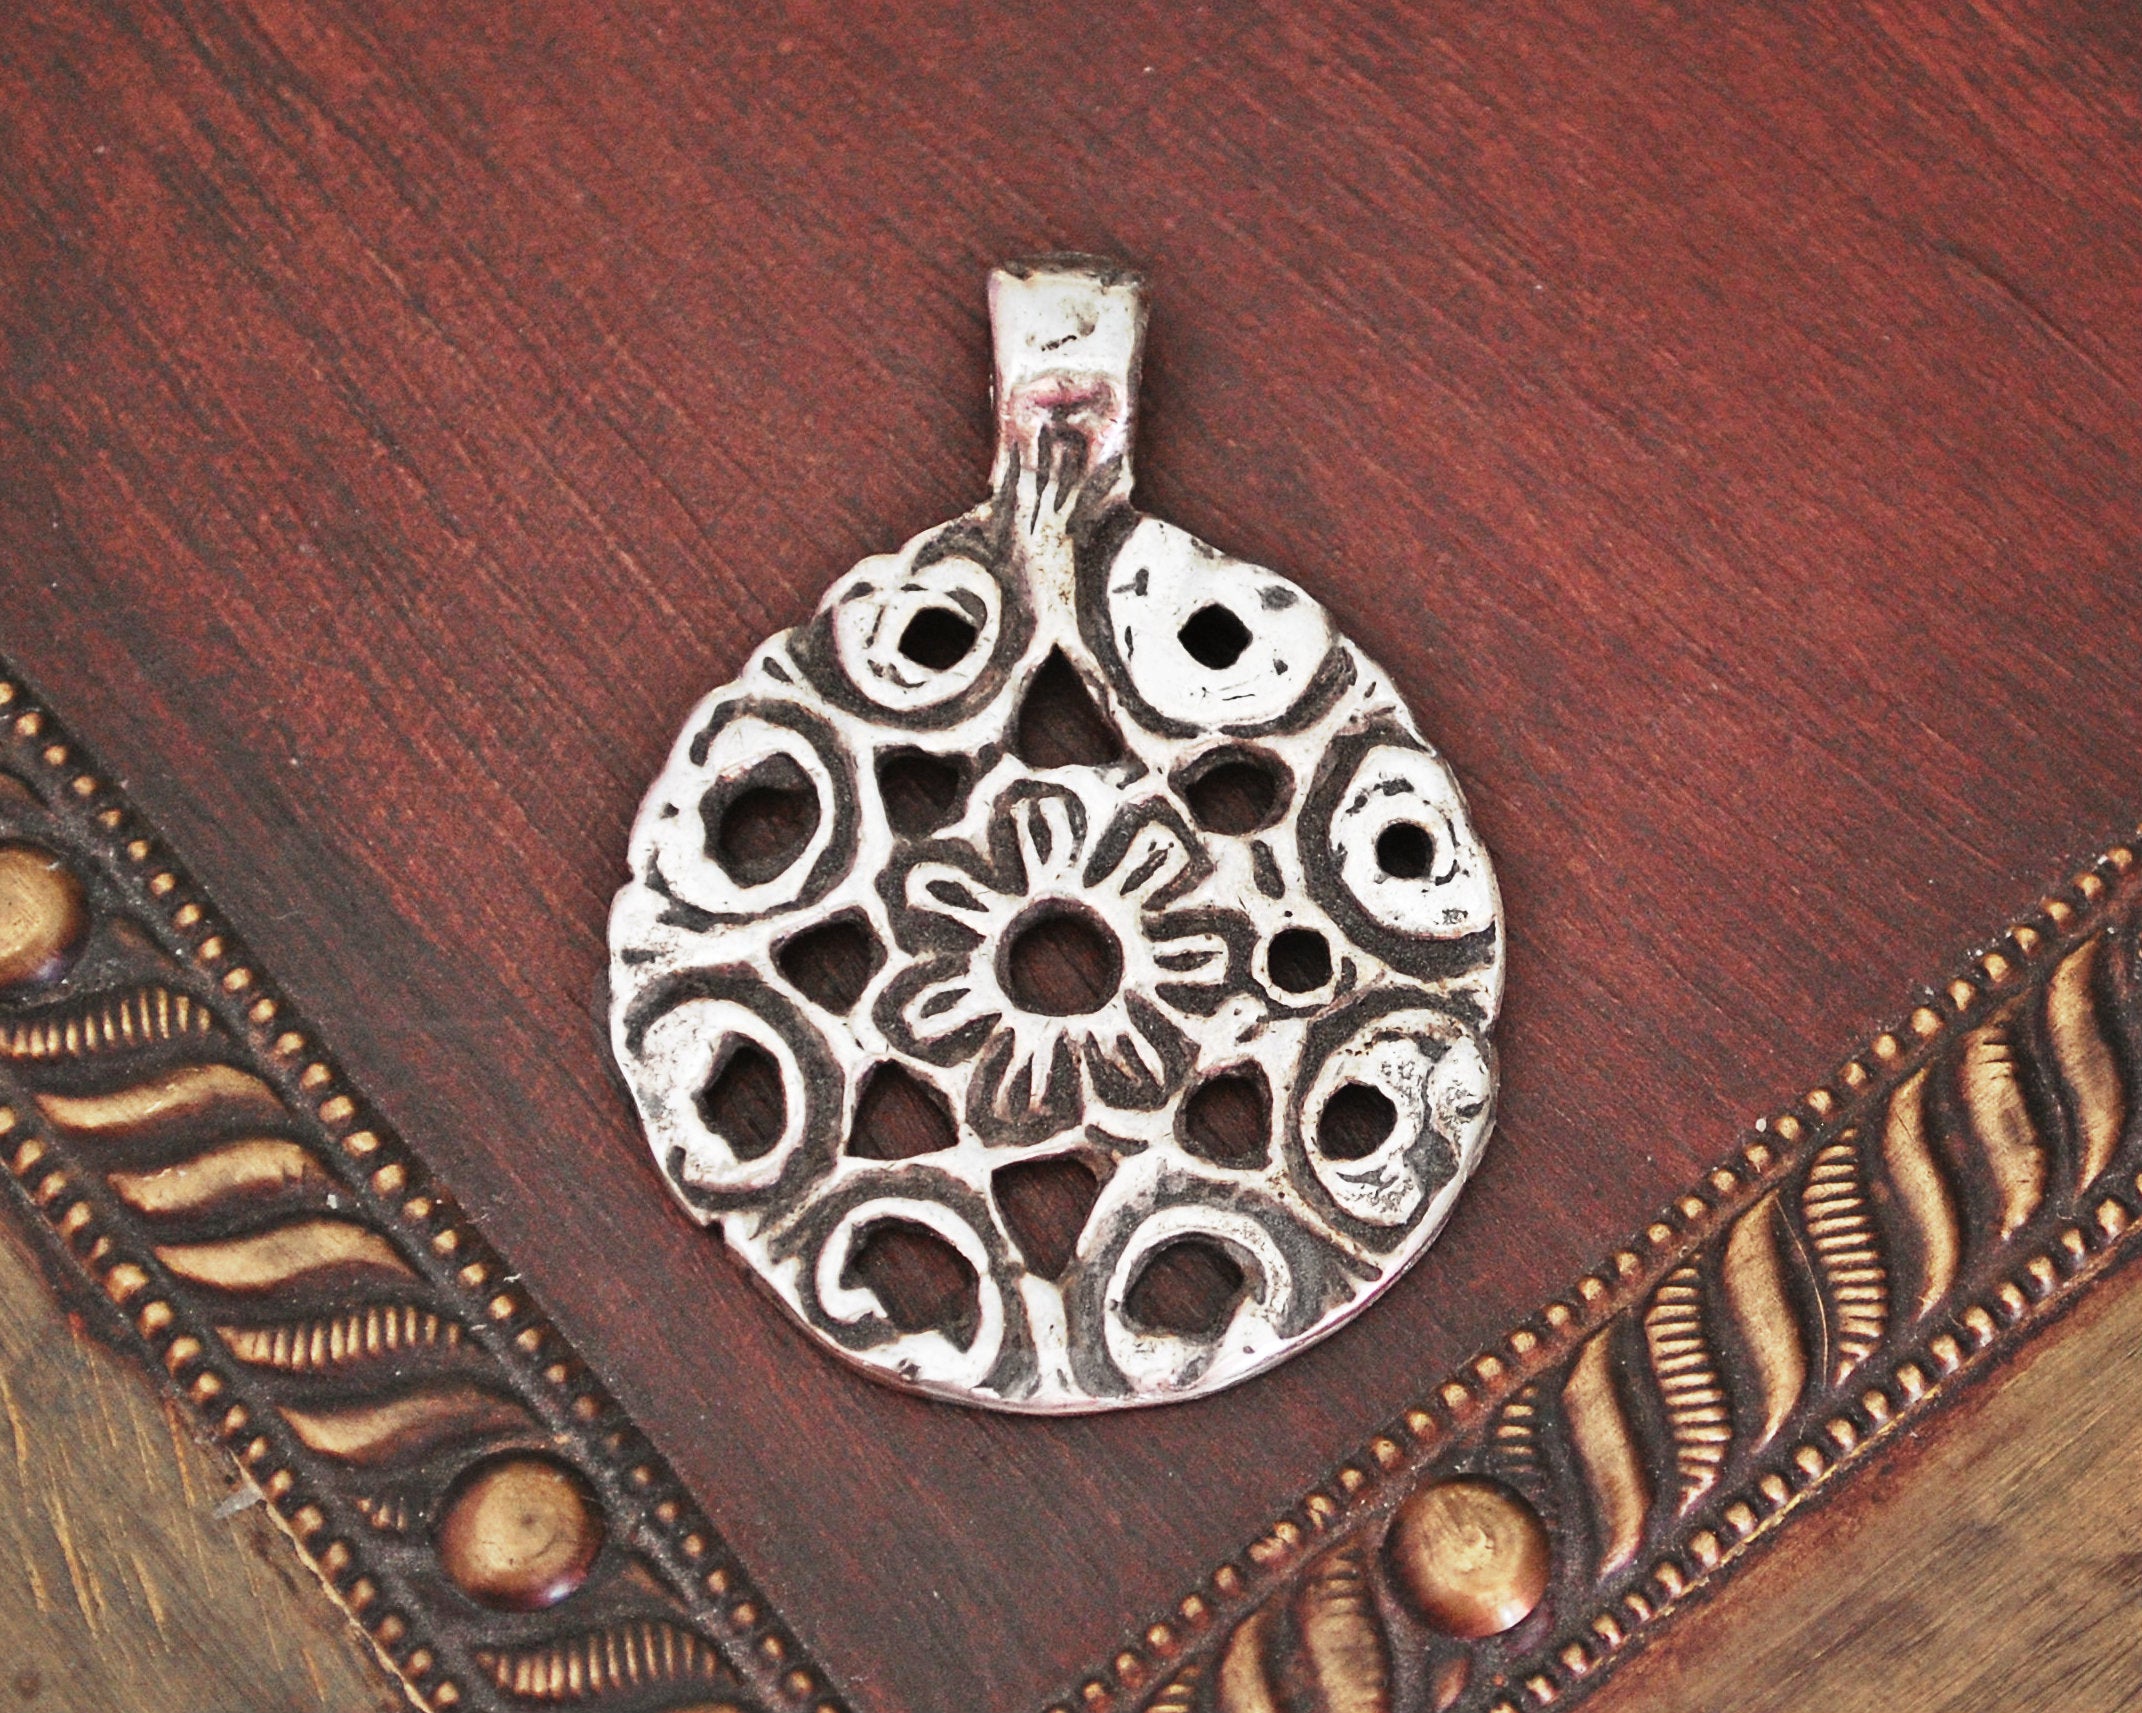 Old Berber Silver Amulet Pendant